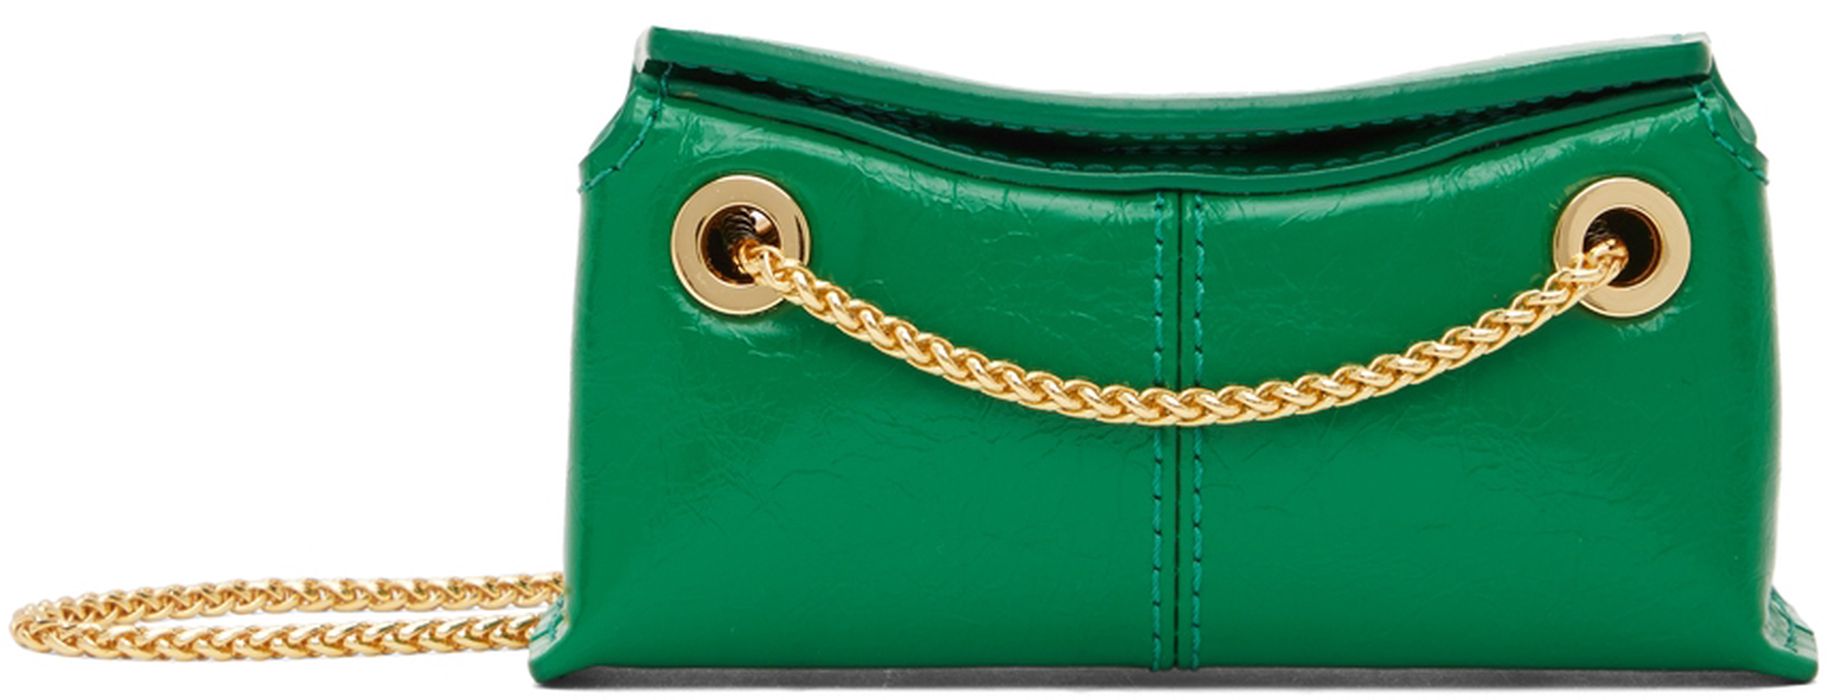 BONBOM Green The Volon Edition Leather Mini Shoulder Bag